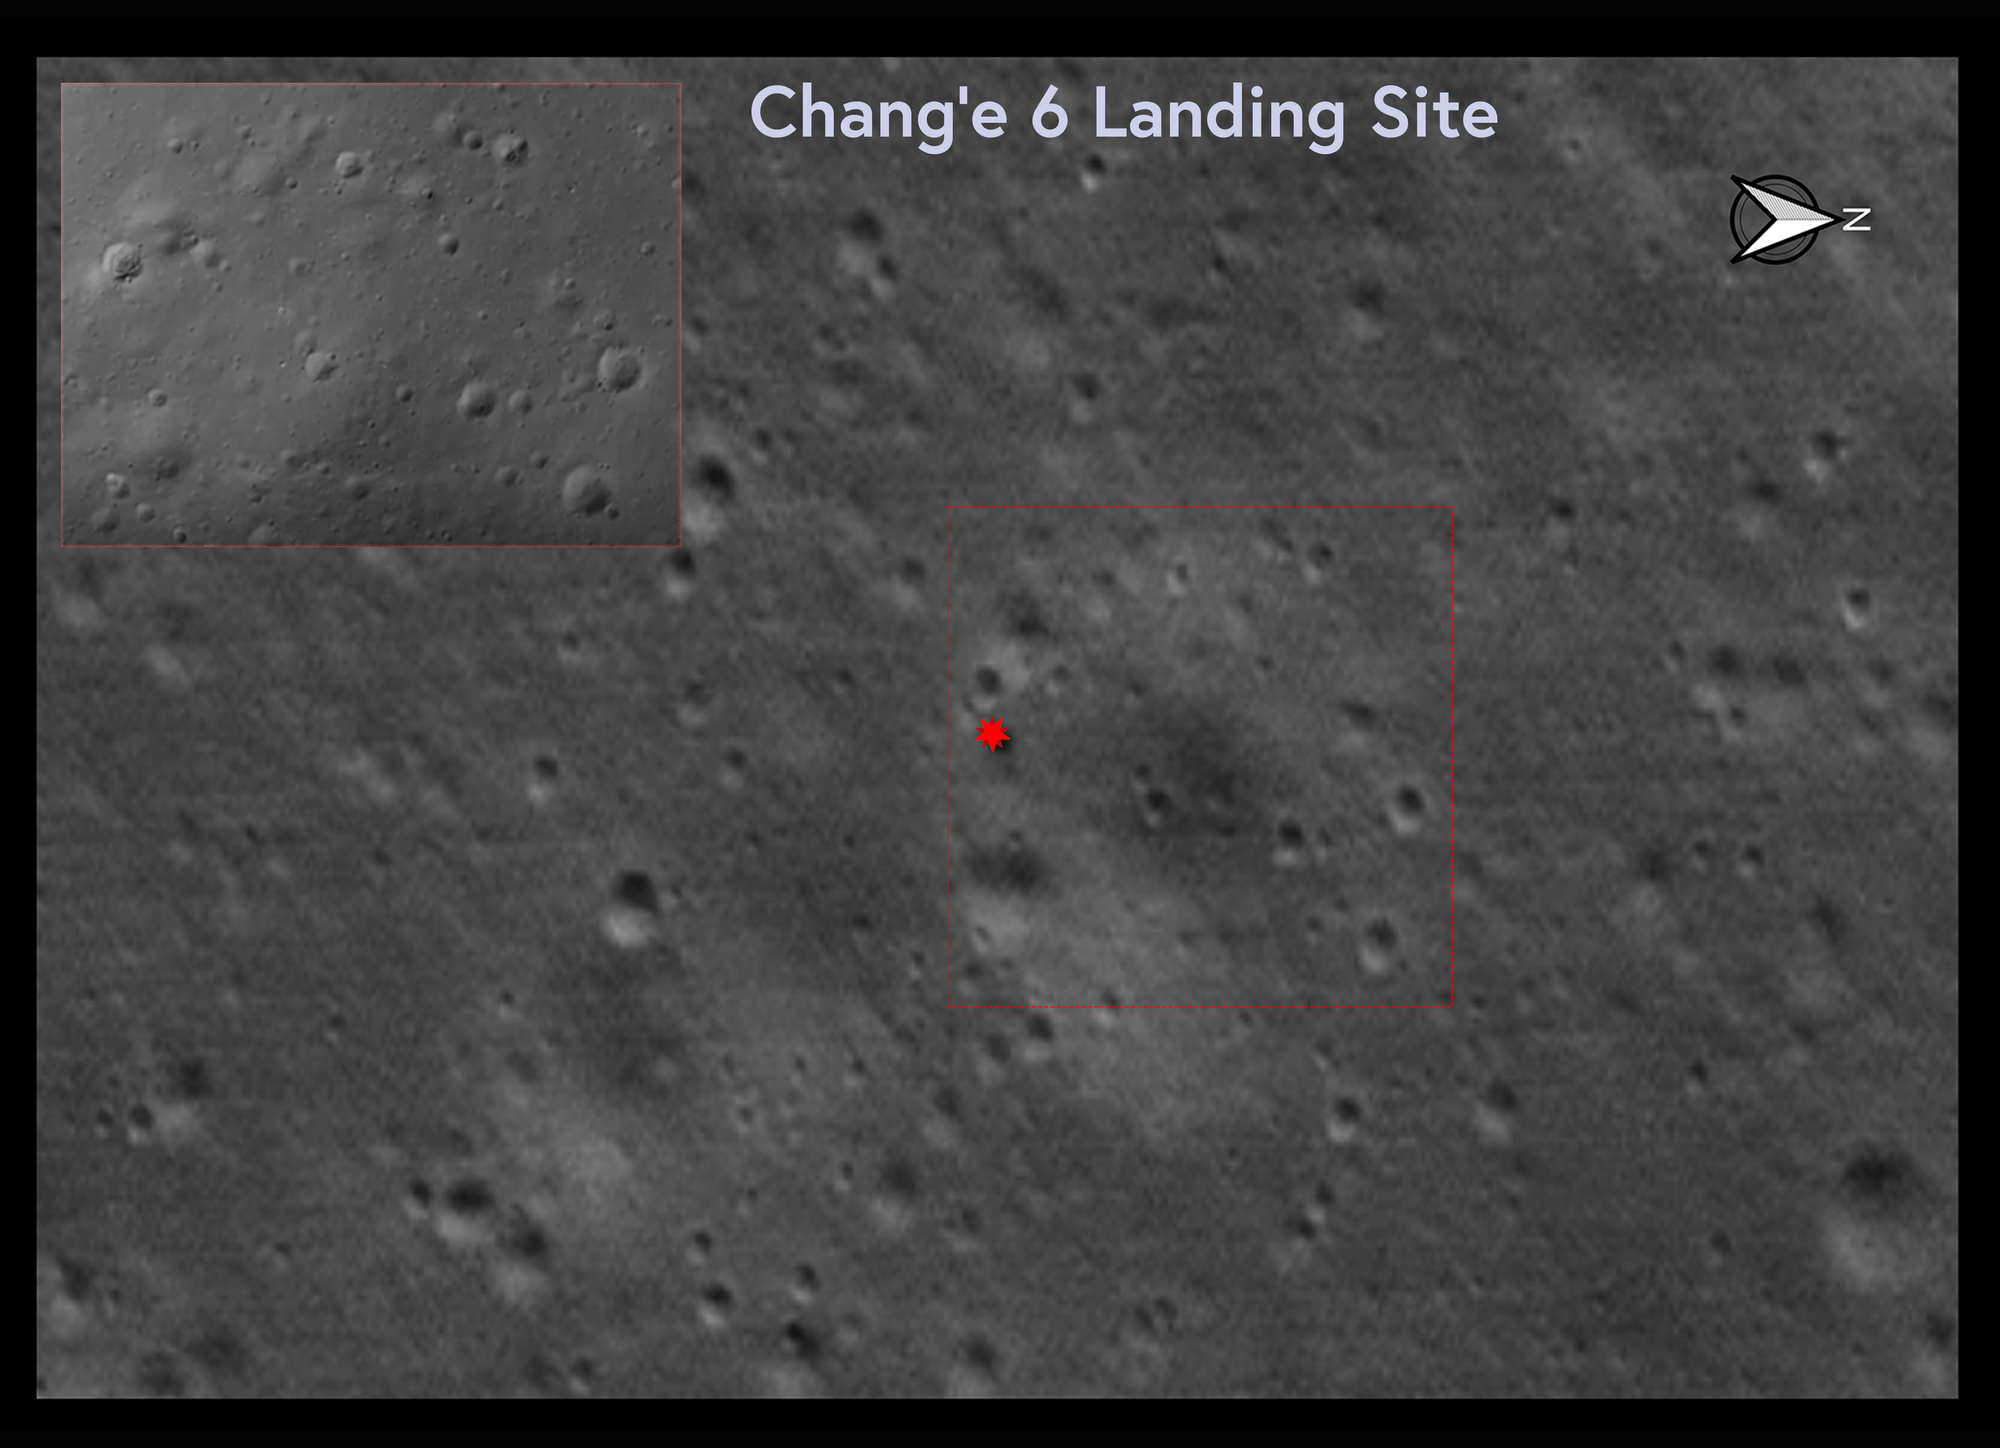 Landing site of chang'e 6 